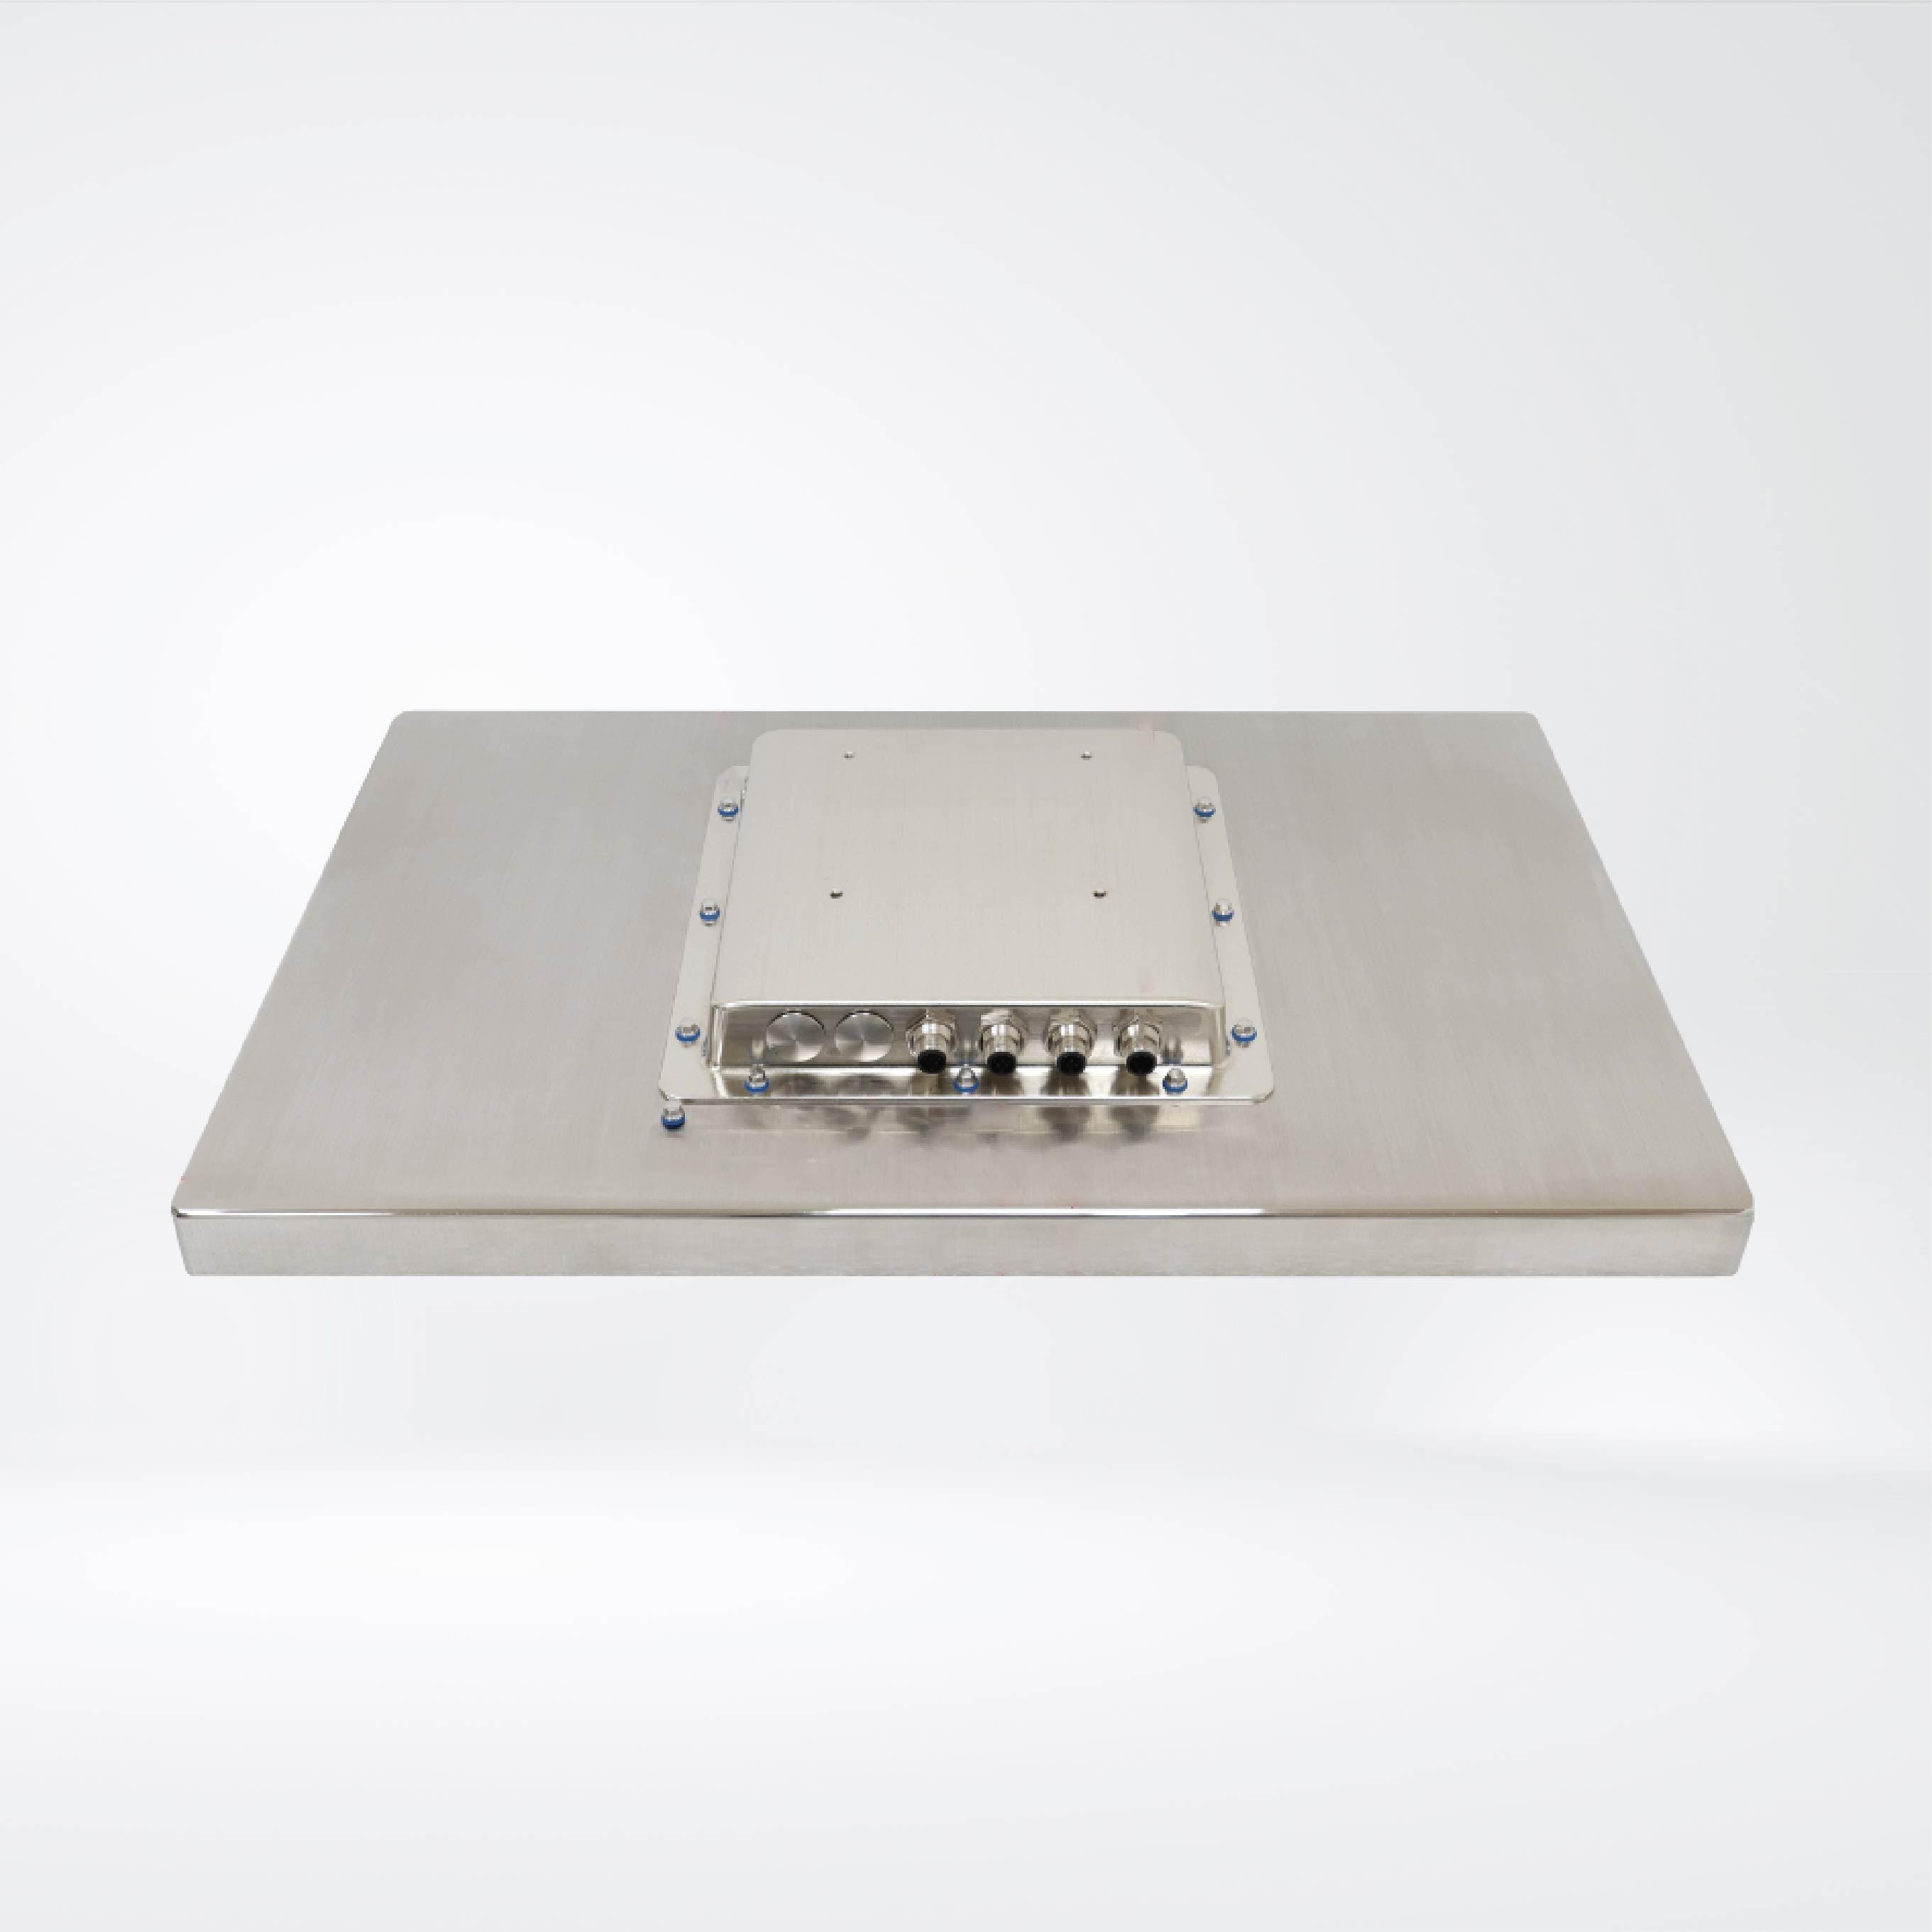 PhanTAM-816BP IP66/ IP69K Food-grade Stainless Steel Panel PC with Intel Celeron J6412 Processor - Riverplus